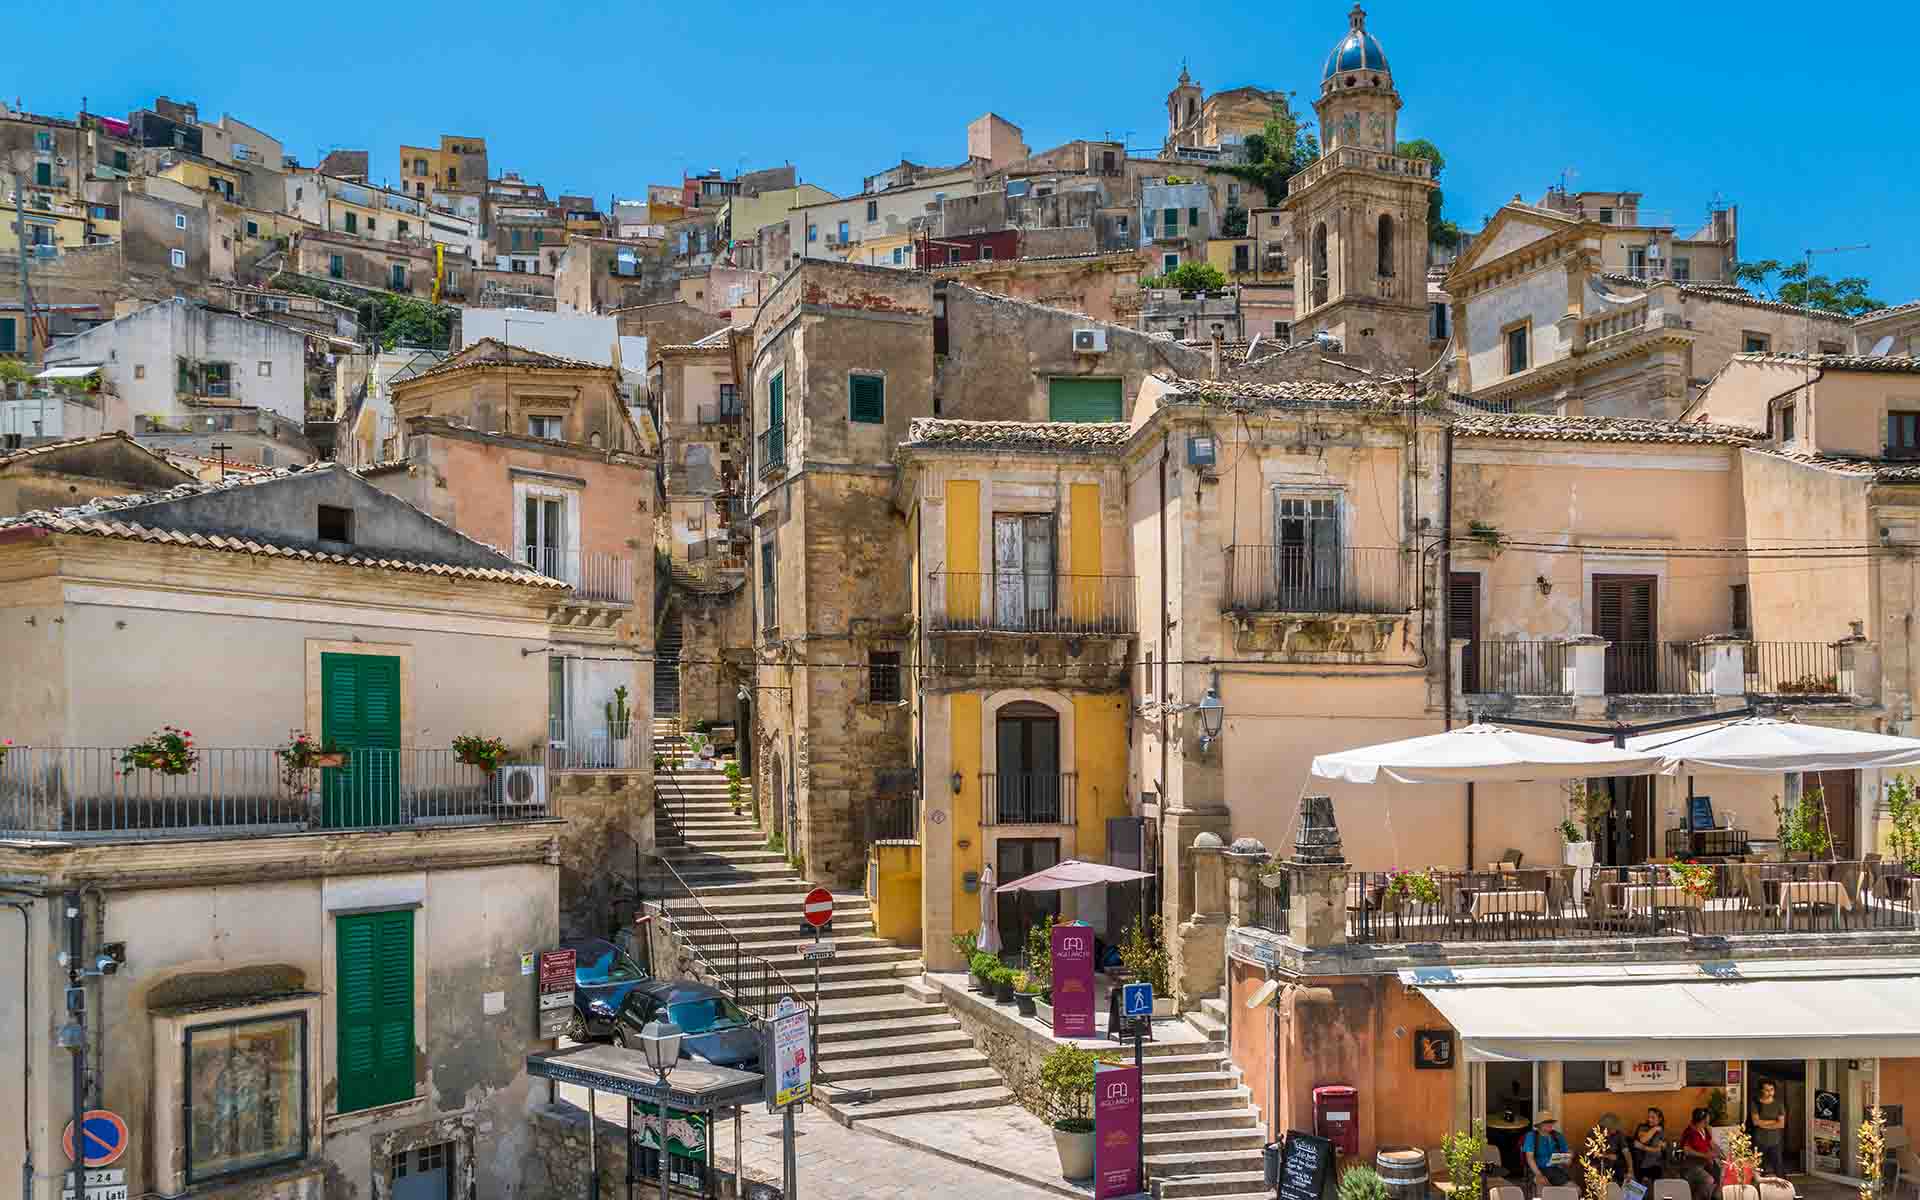 The village of Ragusa Ibla on the island of Sicily.